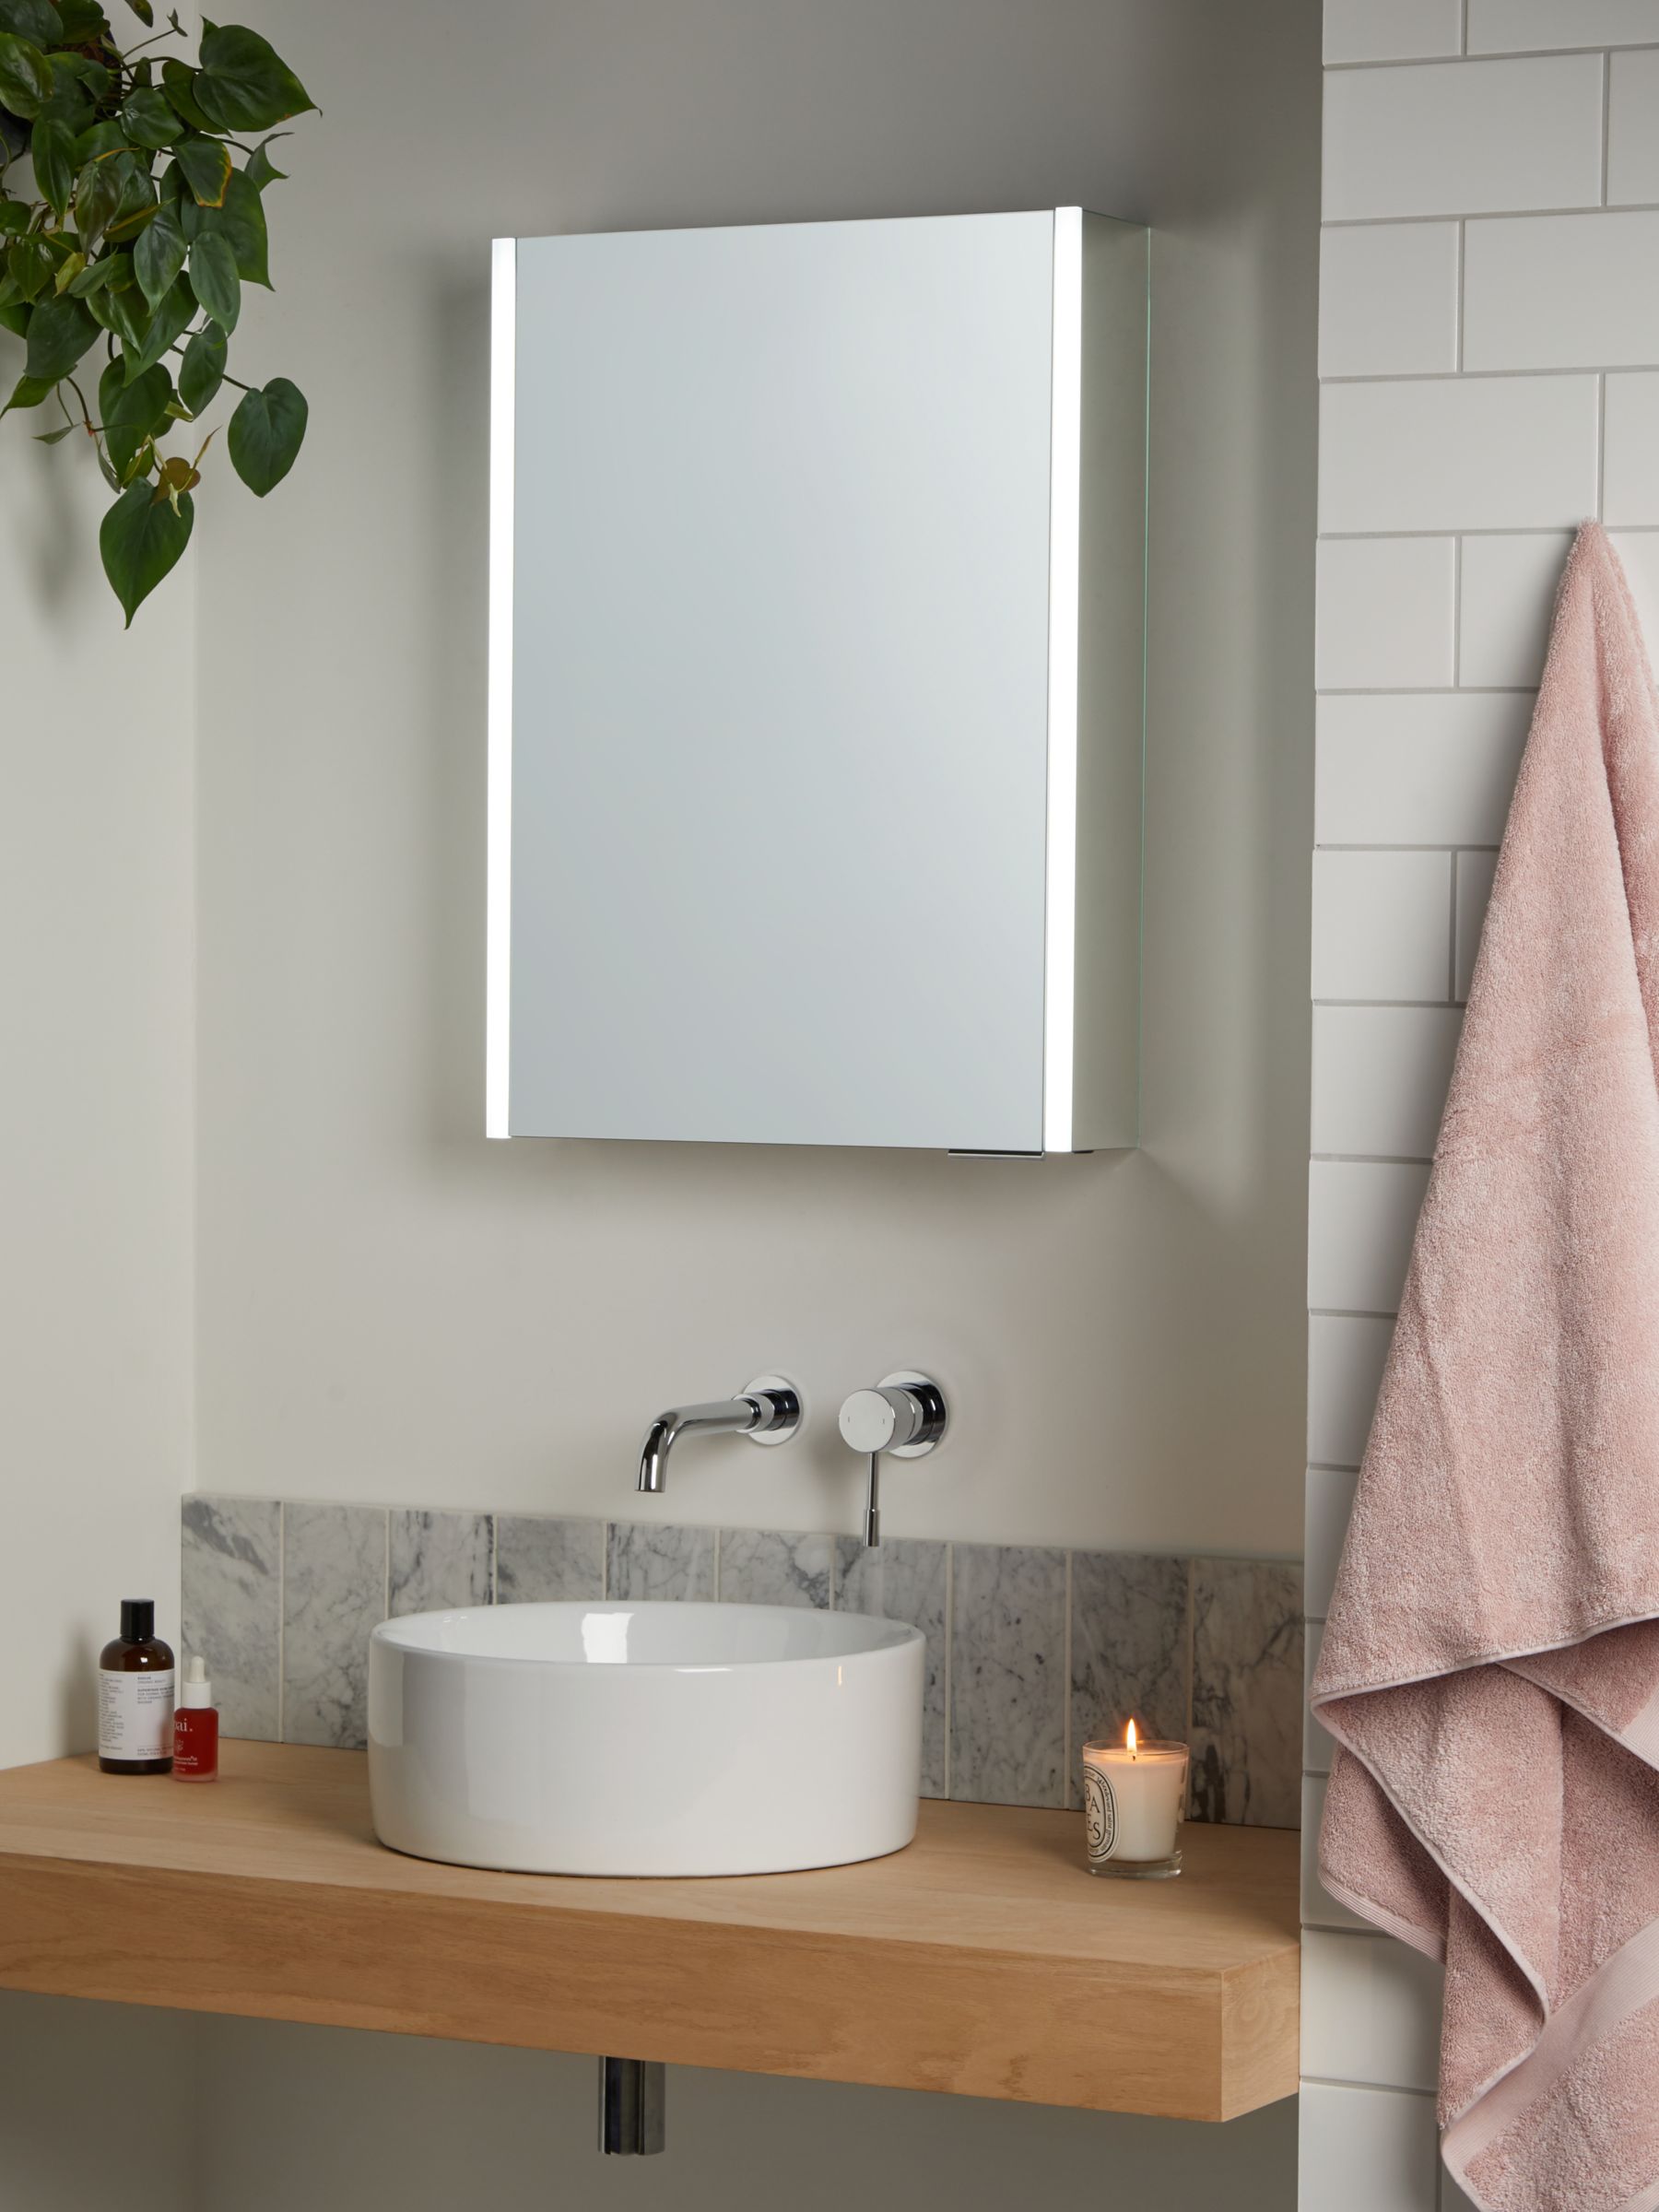 & Bathroom Mirror Cabinets John Lewis Partners